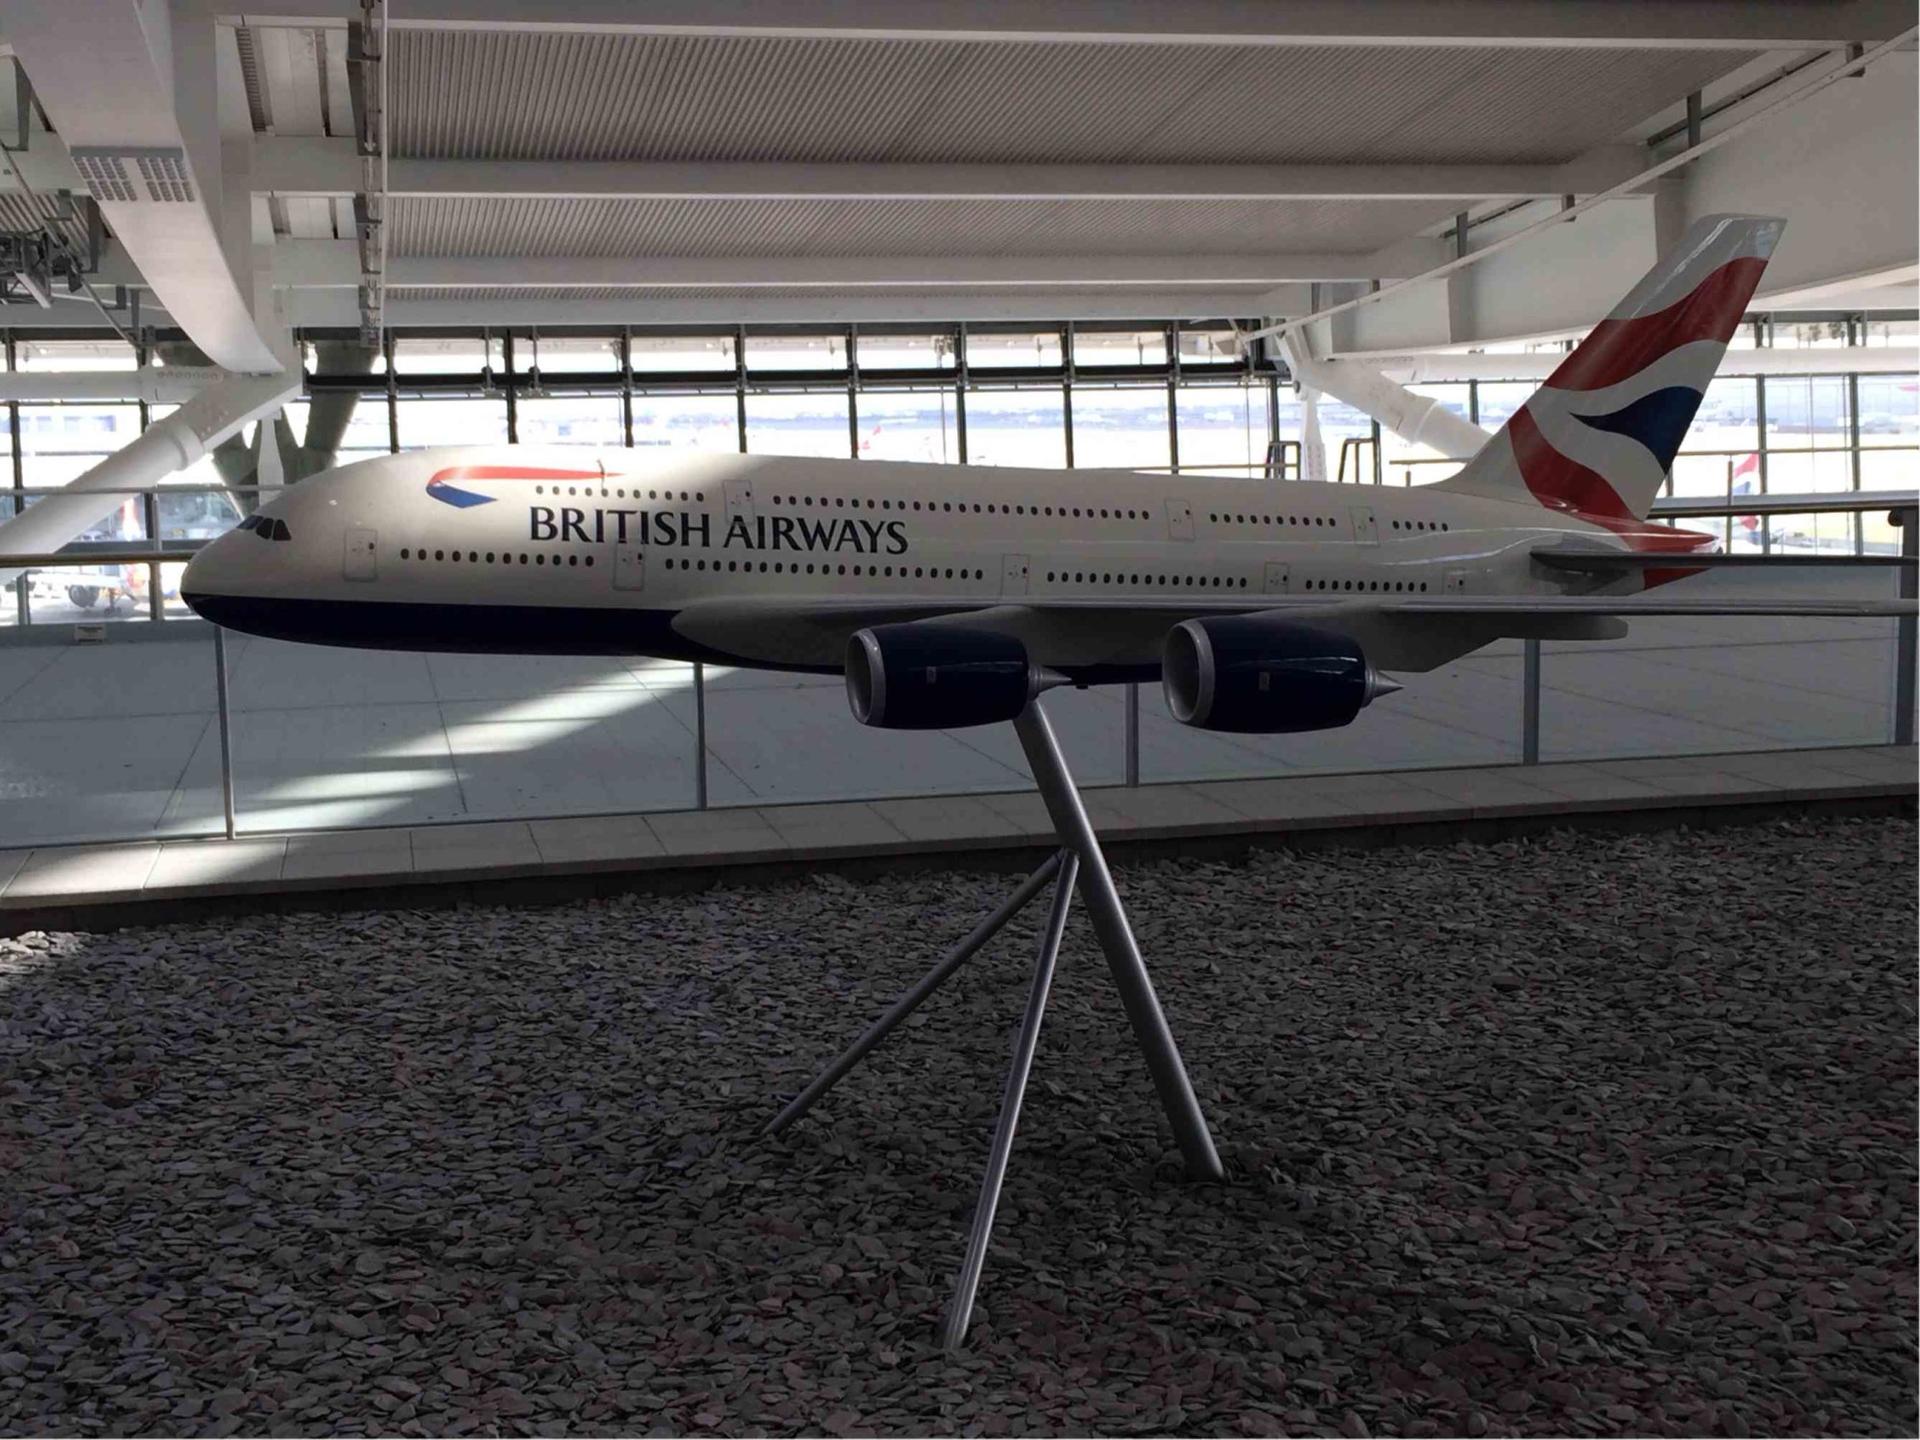 British Airways Galleries Club Lounge image 11 of 41